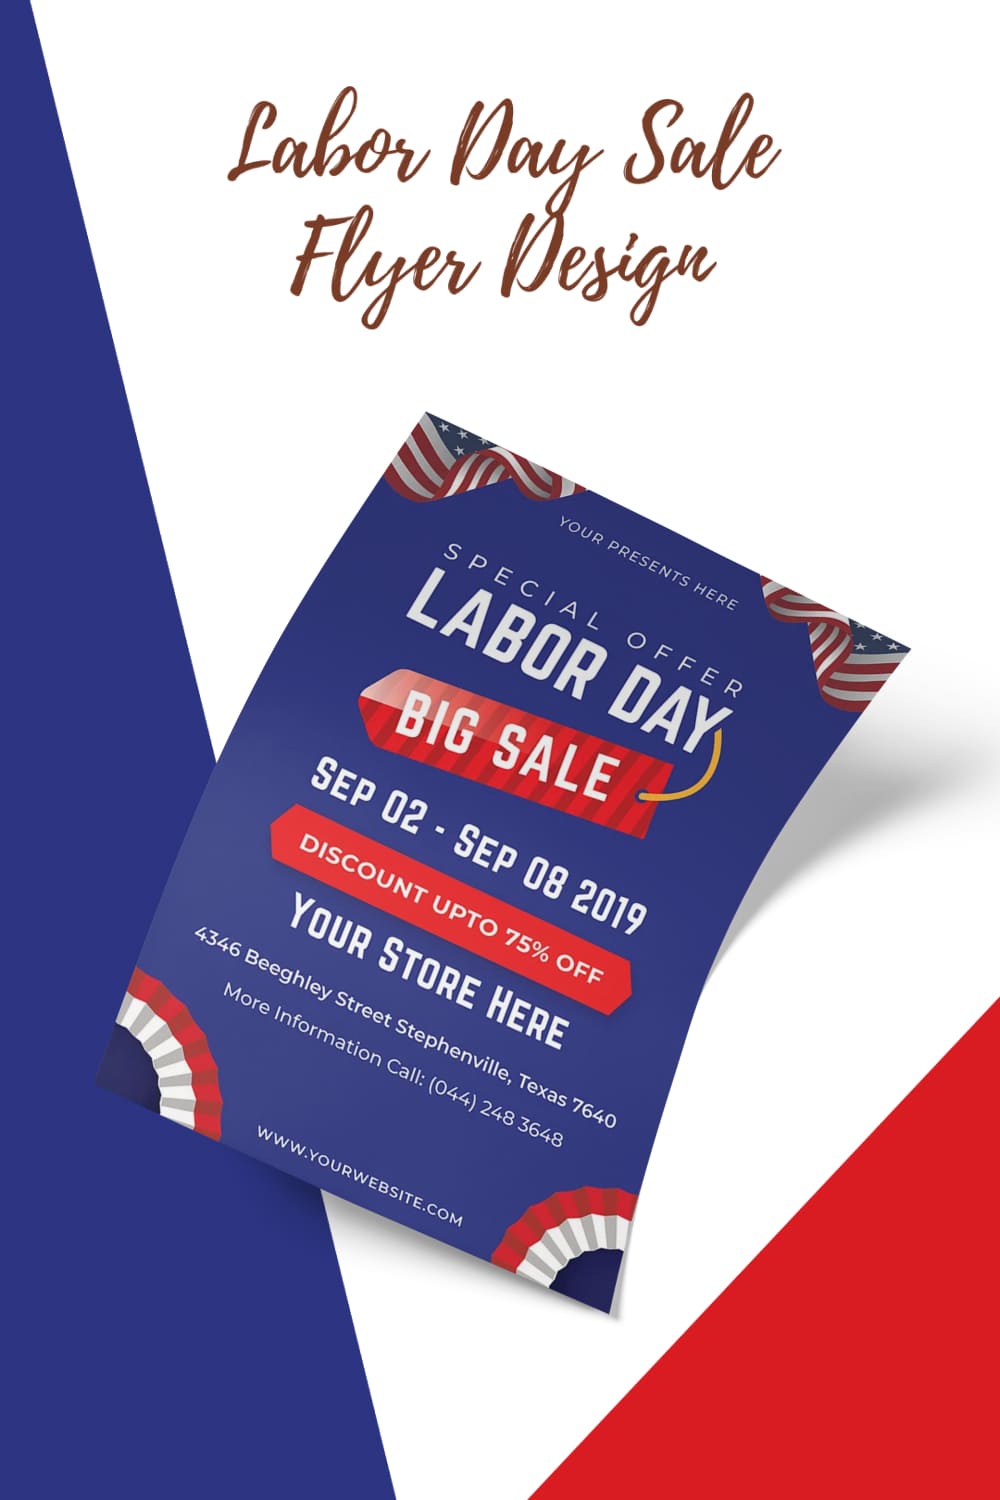 Truis - Labor Day Sale Flyer Design - Corporate Identity Template - Pinterest.